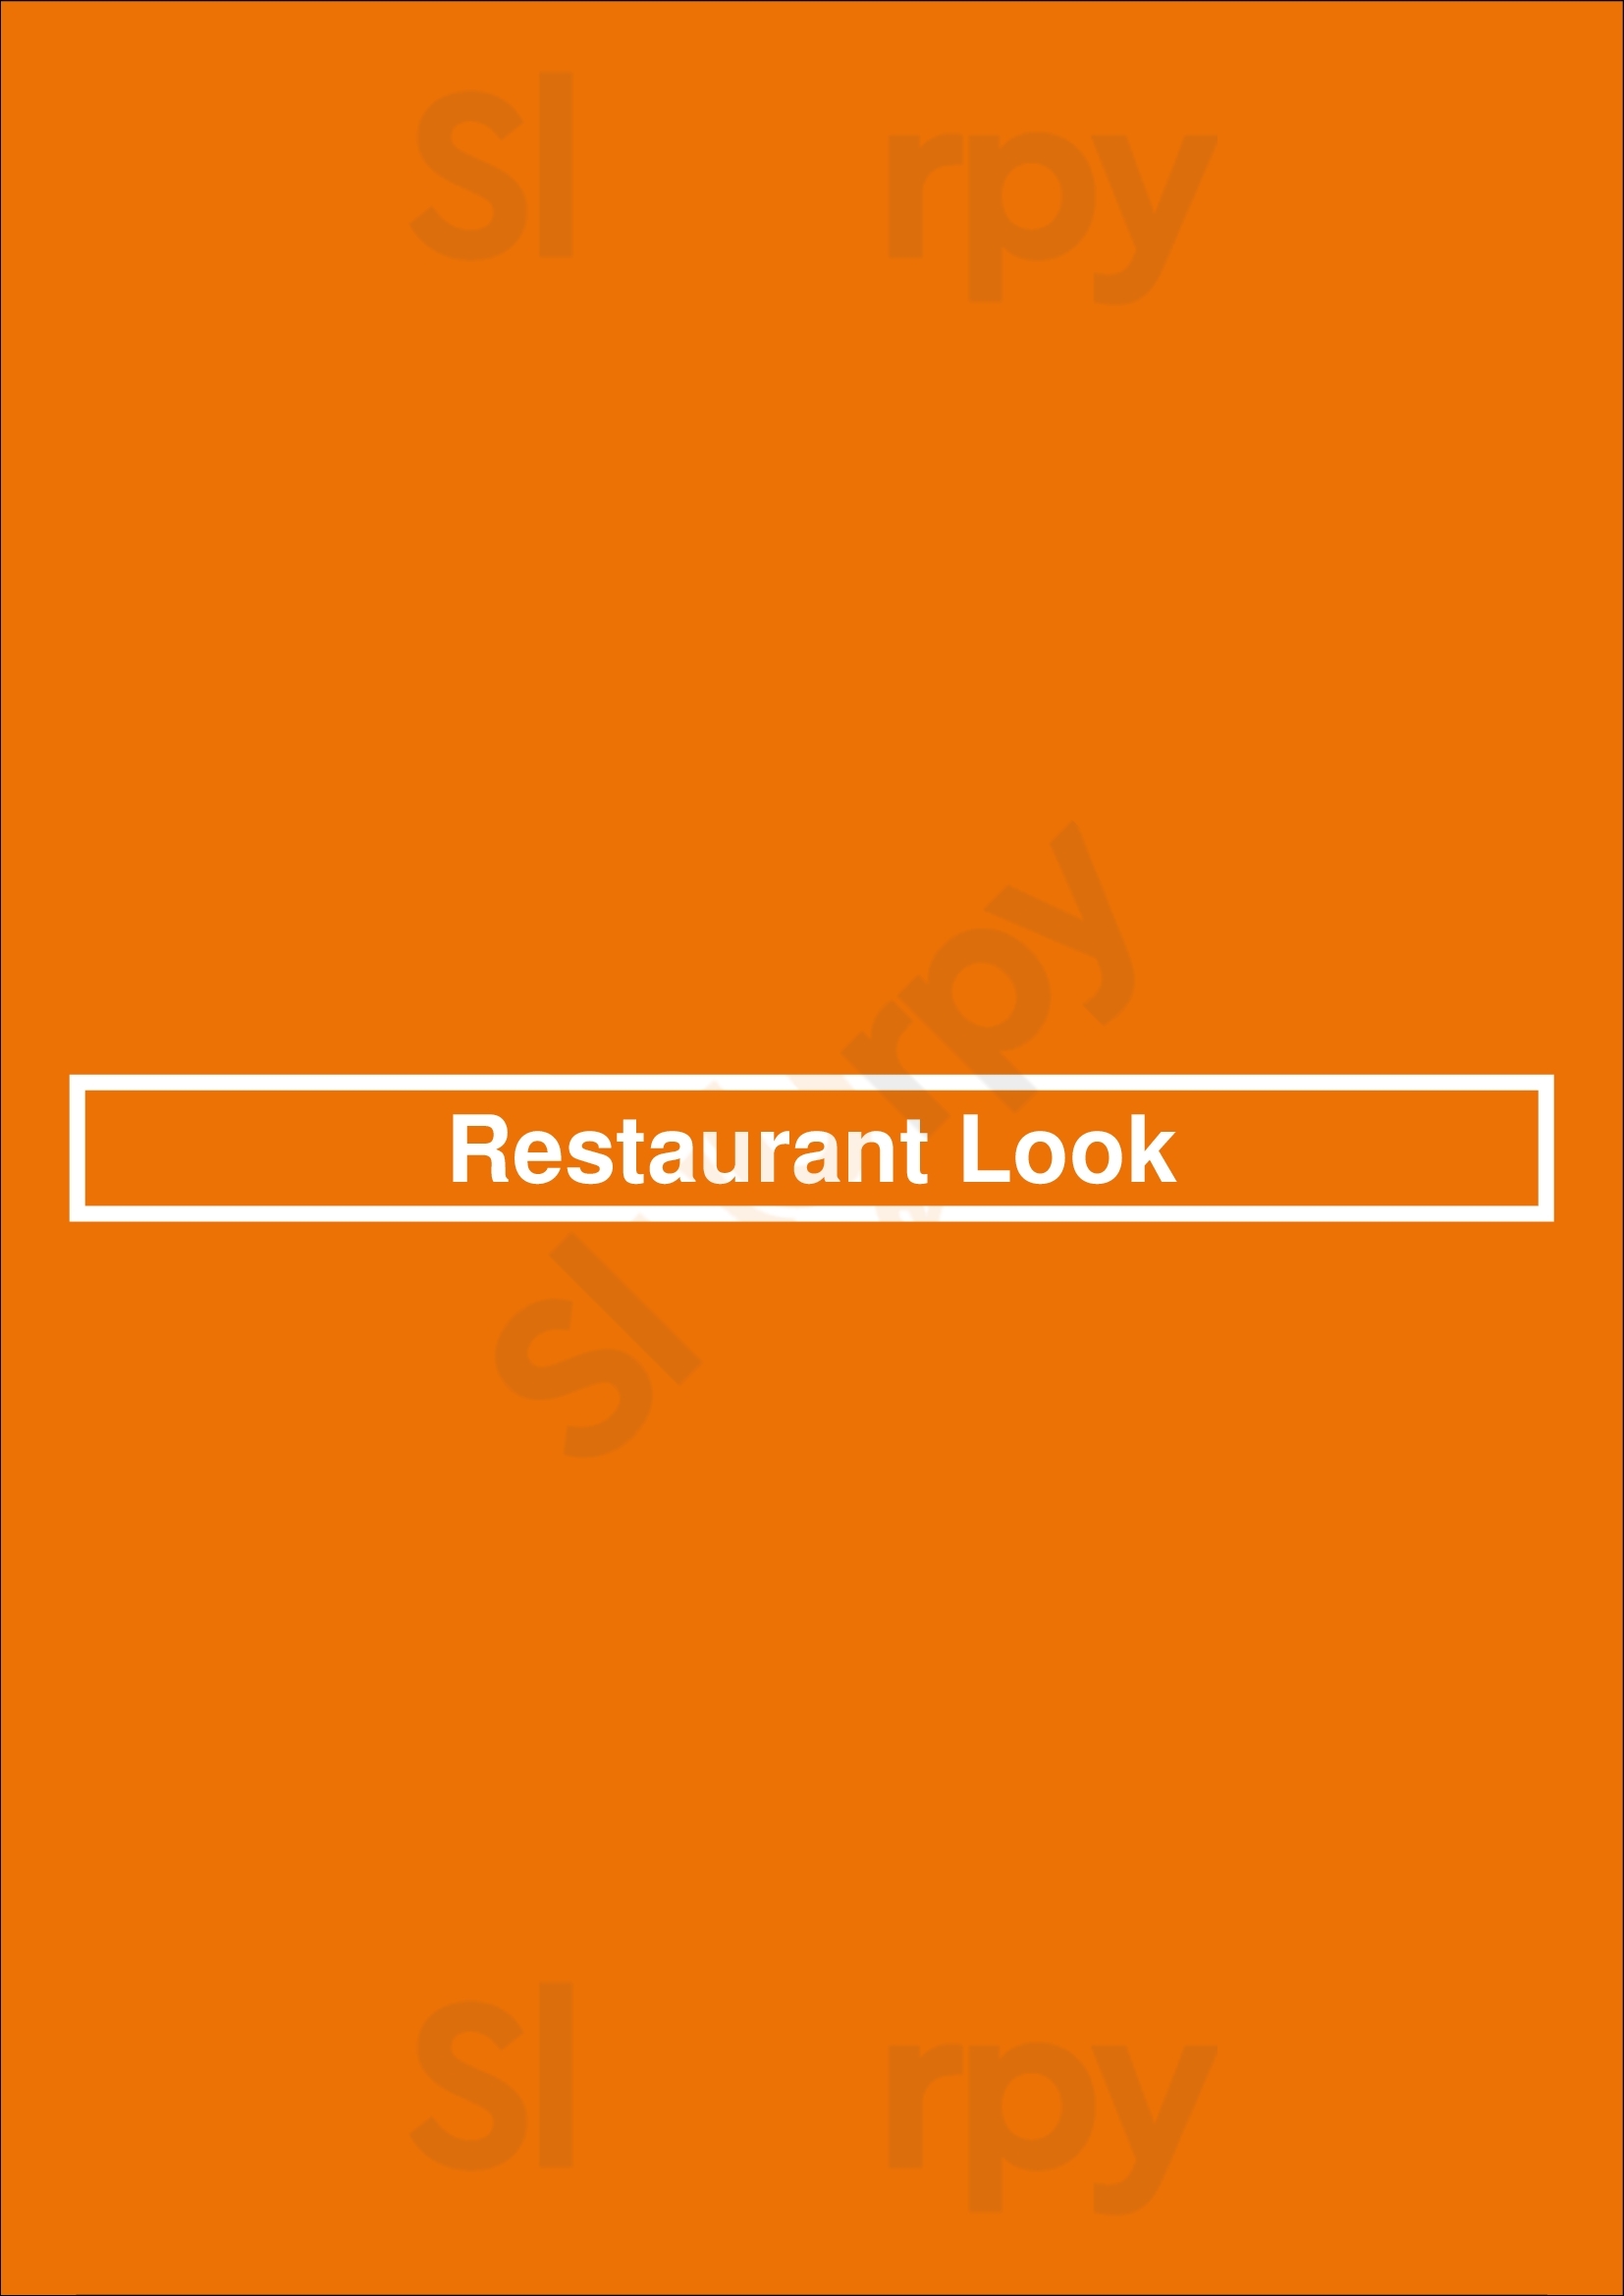 Restaurant Look Rotterdam Menu - 1